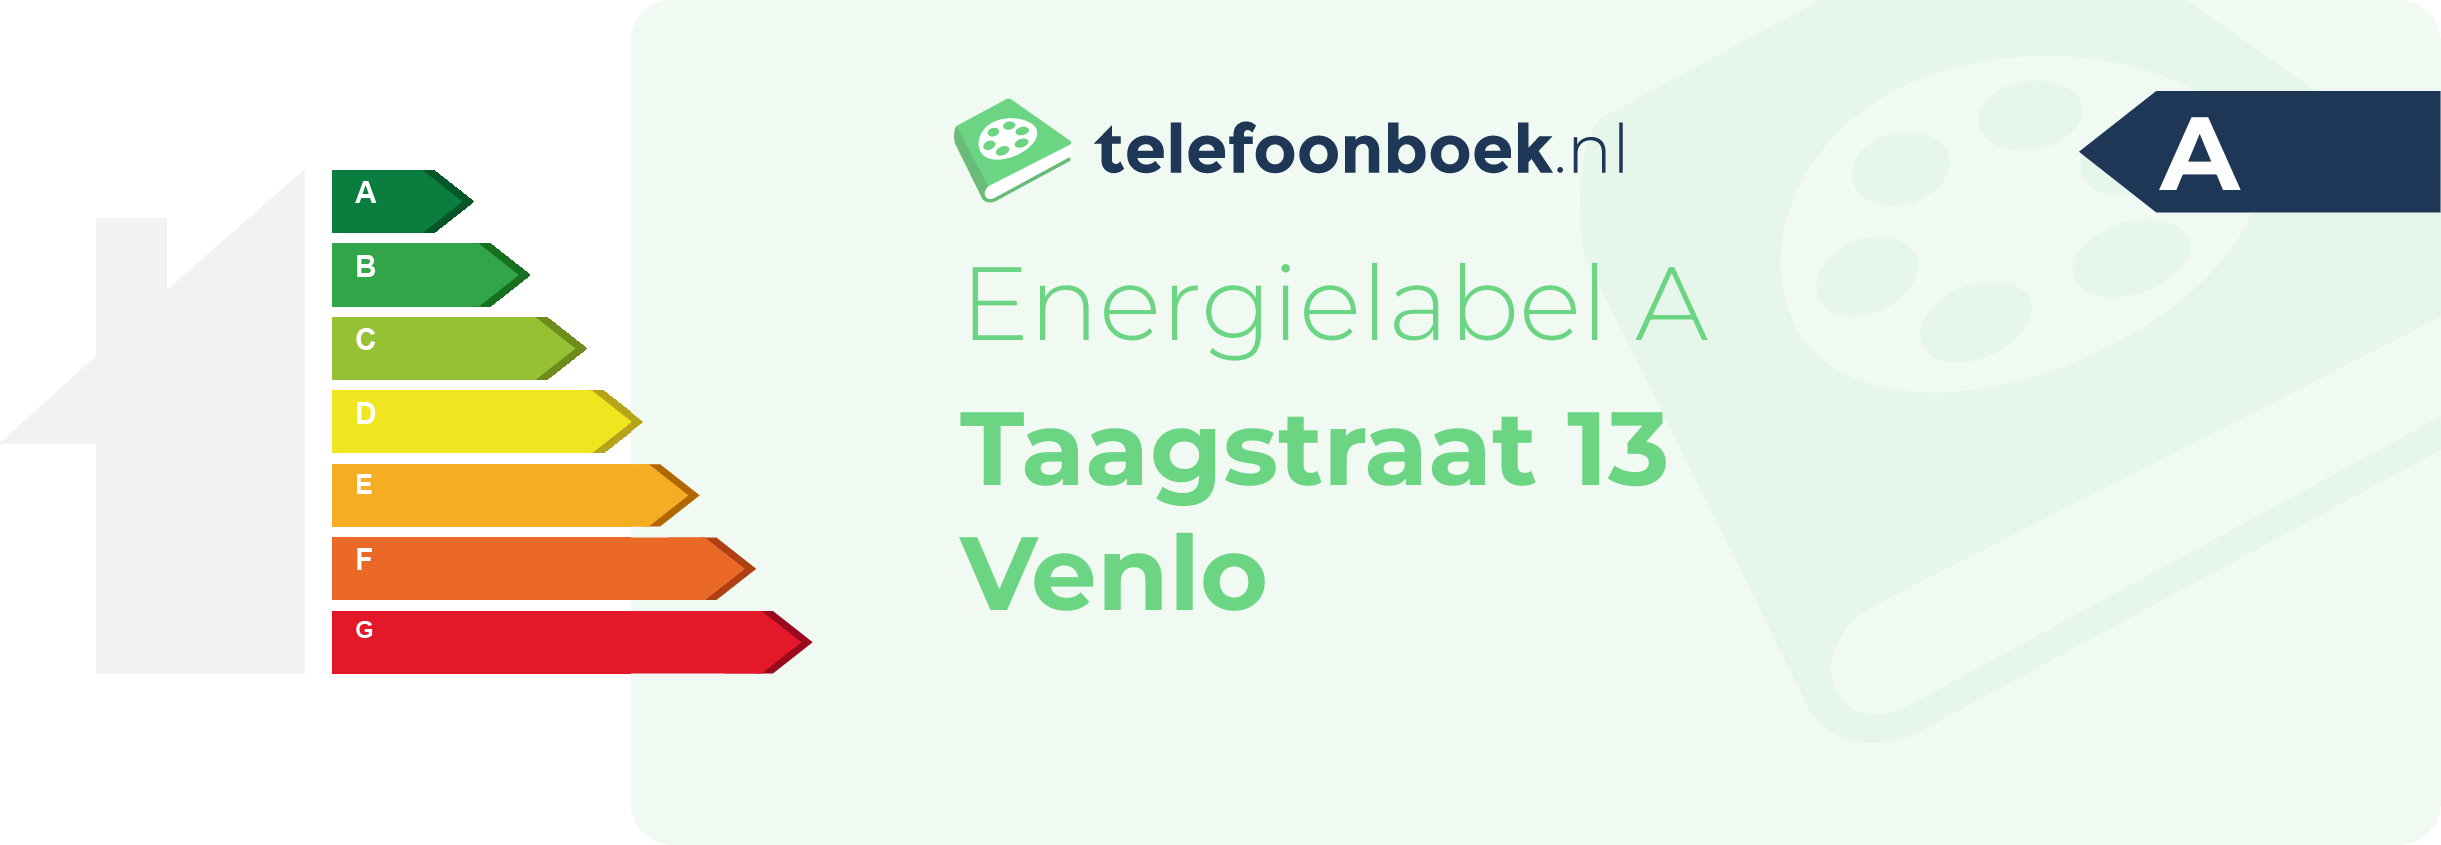 Energielabel Taagstraat 13 Venlo